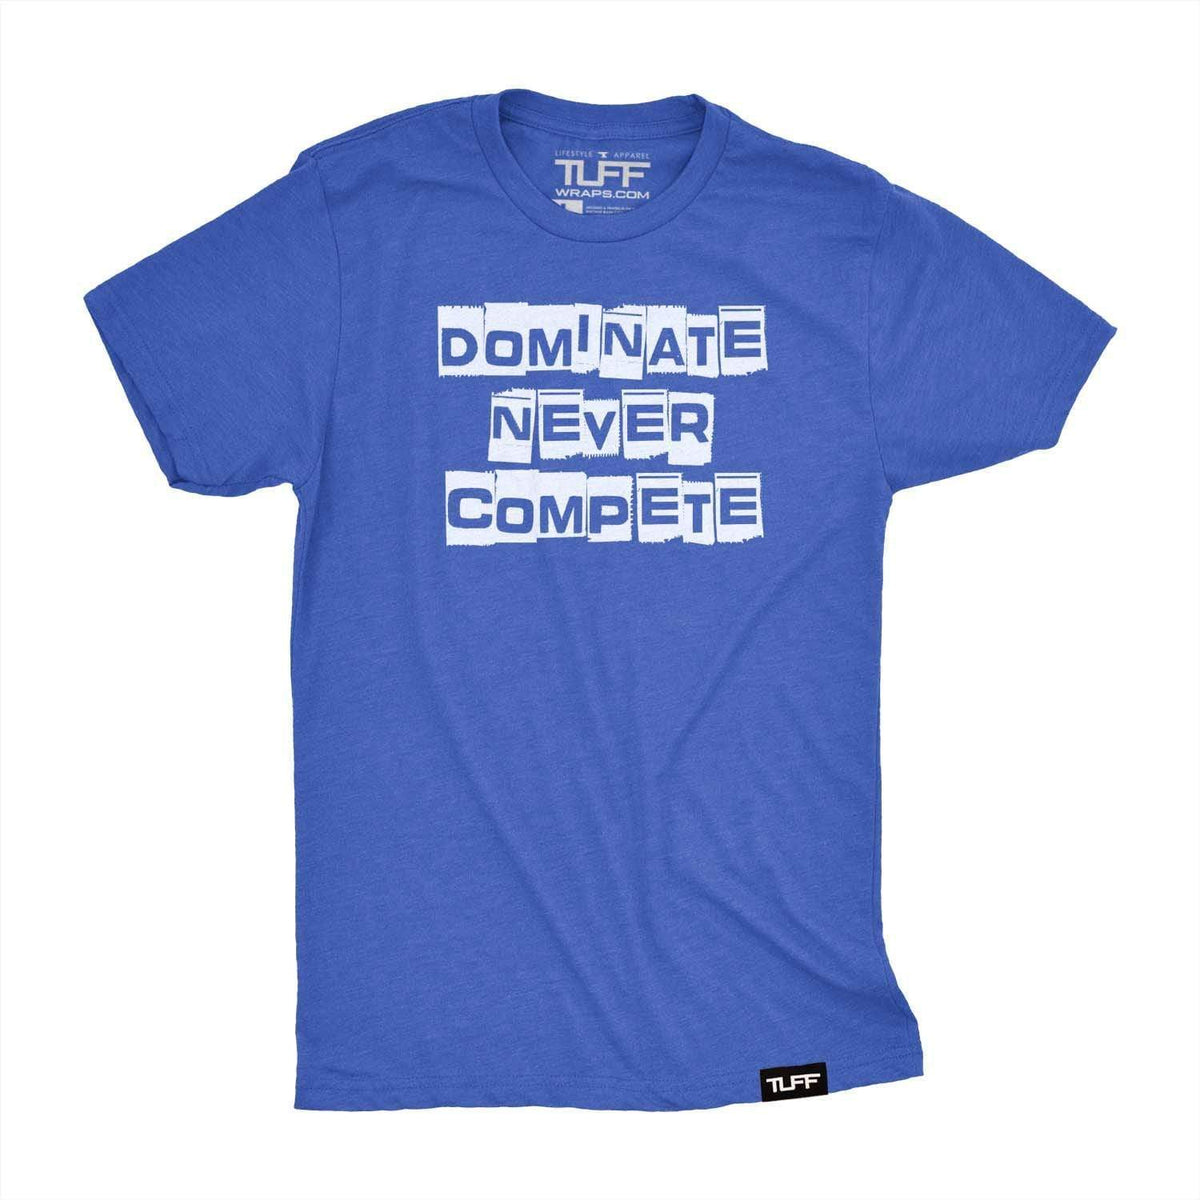 Dominate Never Compete Tee S / Vintage Blue TuffWraps.com